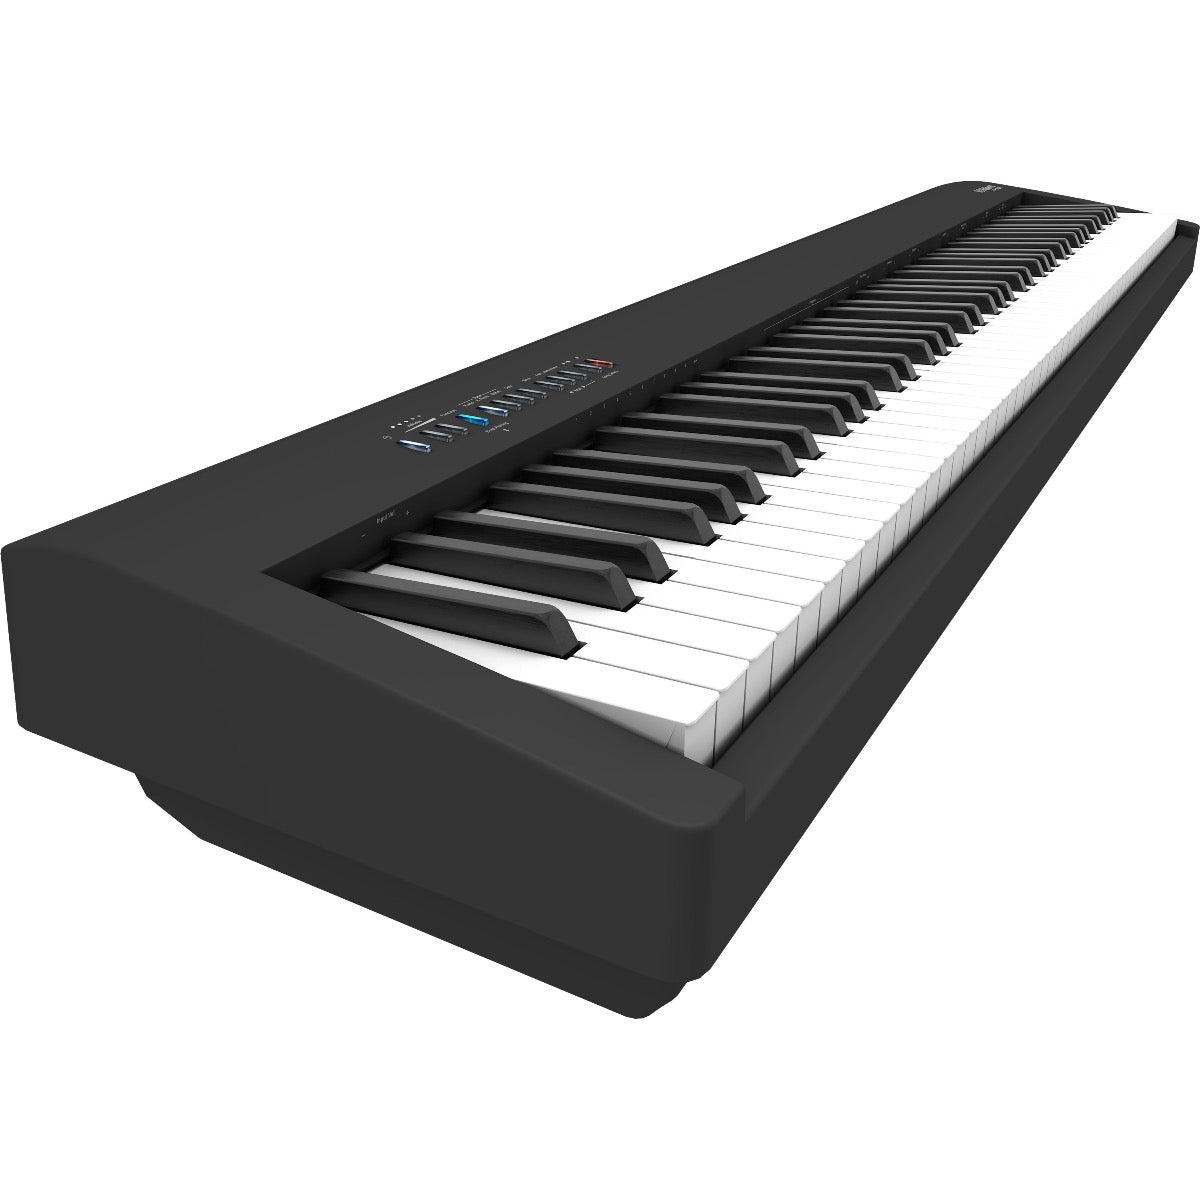 Roland FP-30X Digital Piano - Black